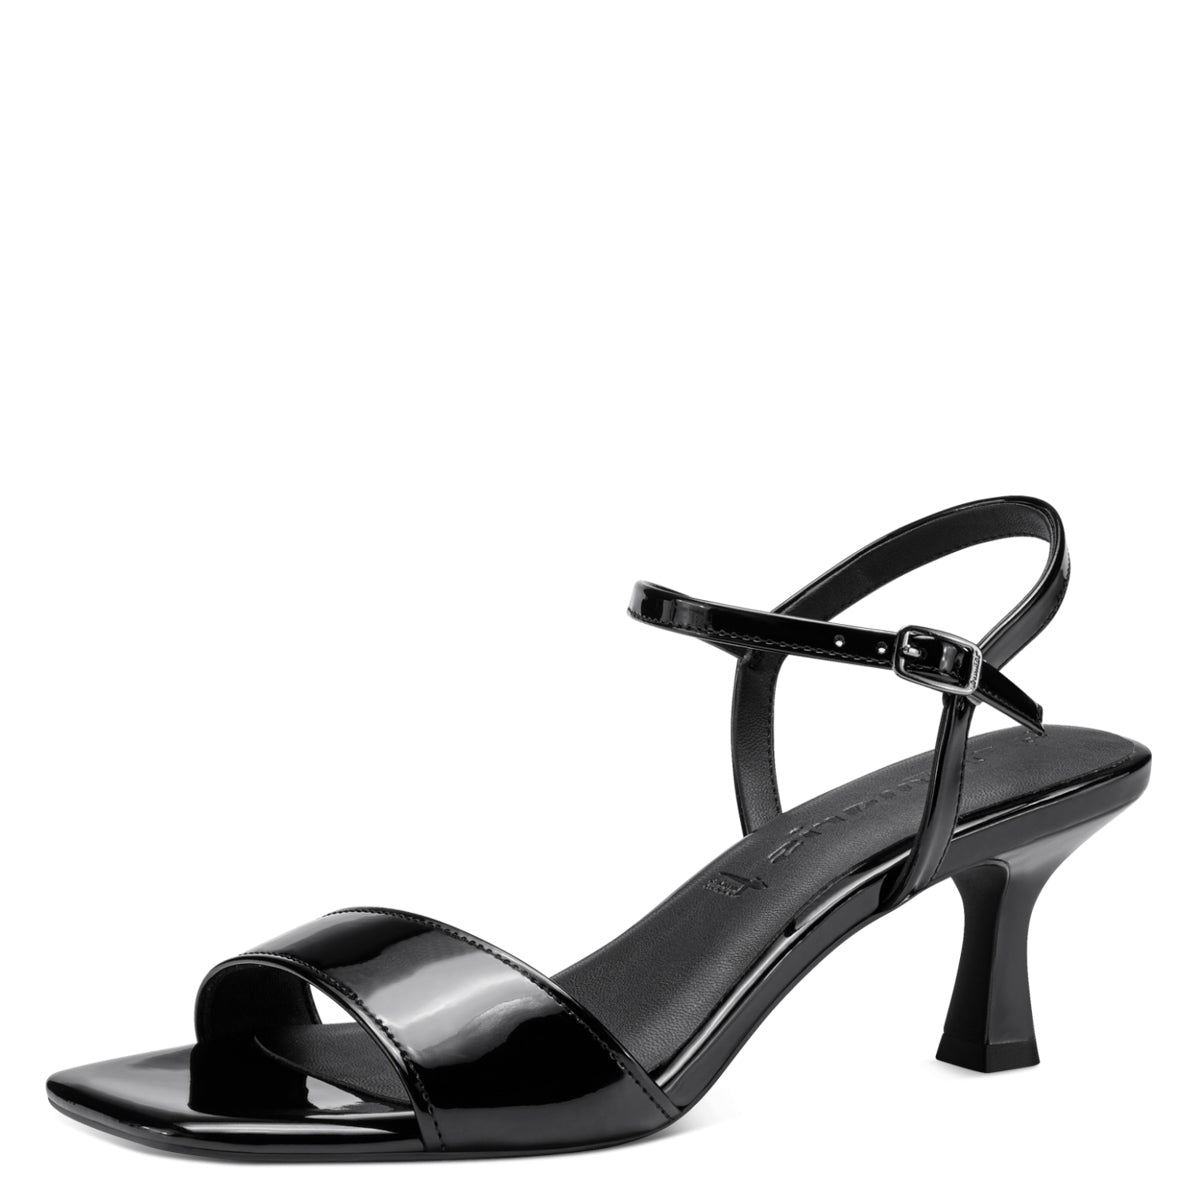 Sleek and Sassy Black Patent Low Heel Sandals